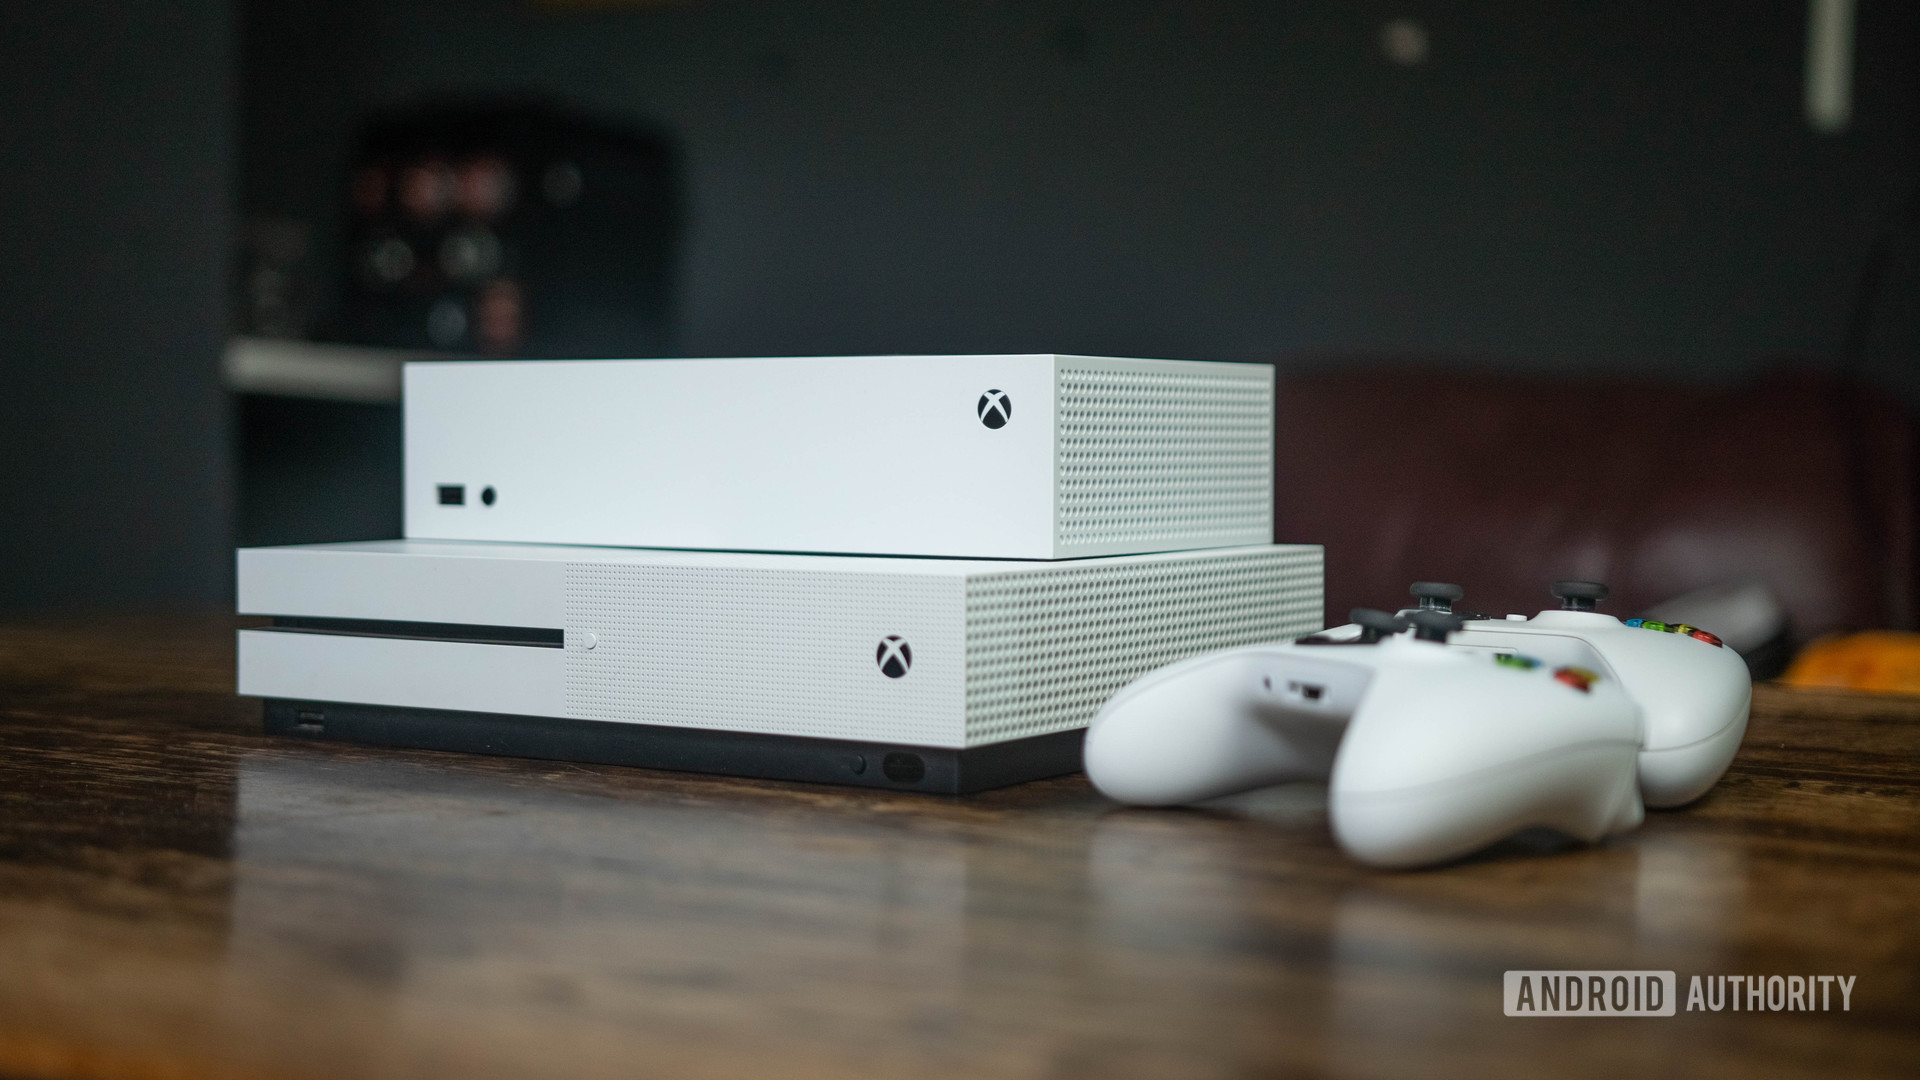 Review: The Xbox Series S, Microsoft's smallest Xbox - Polygon